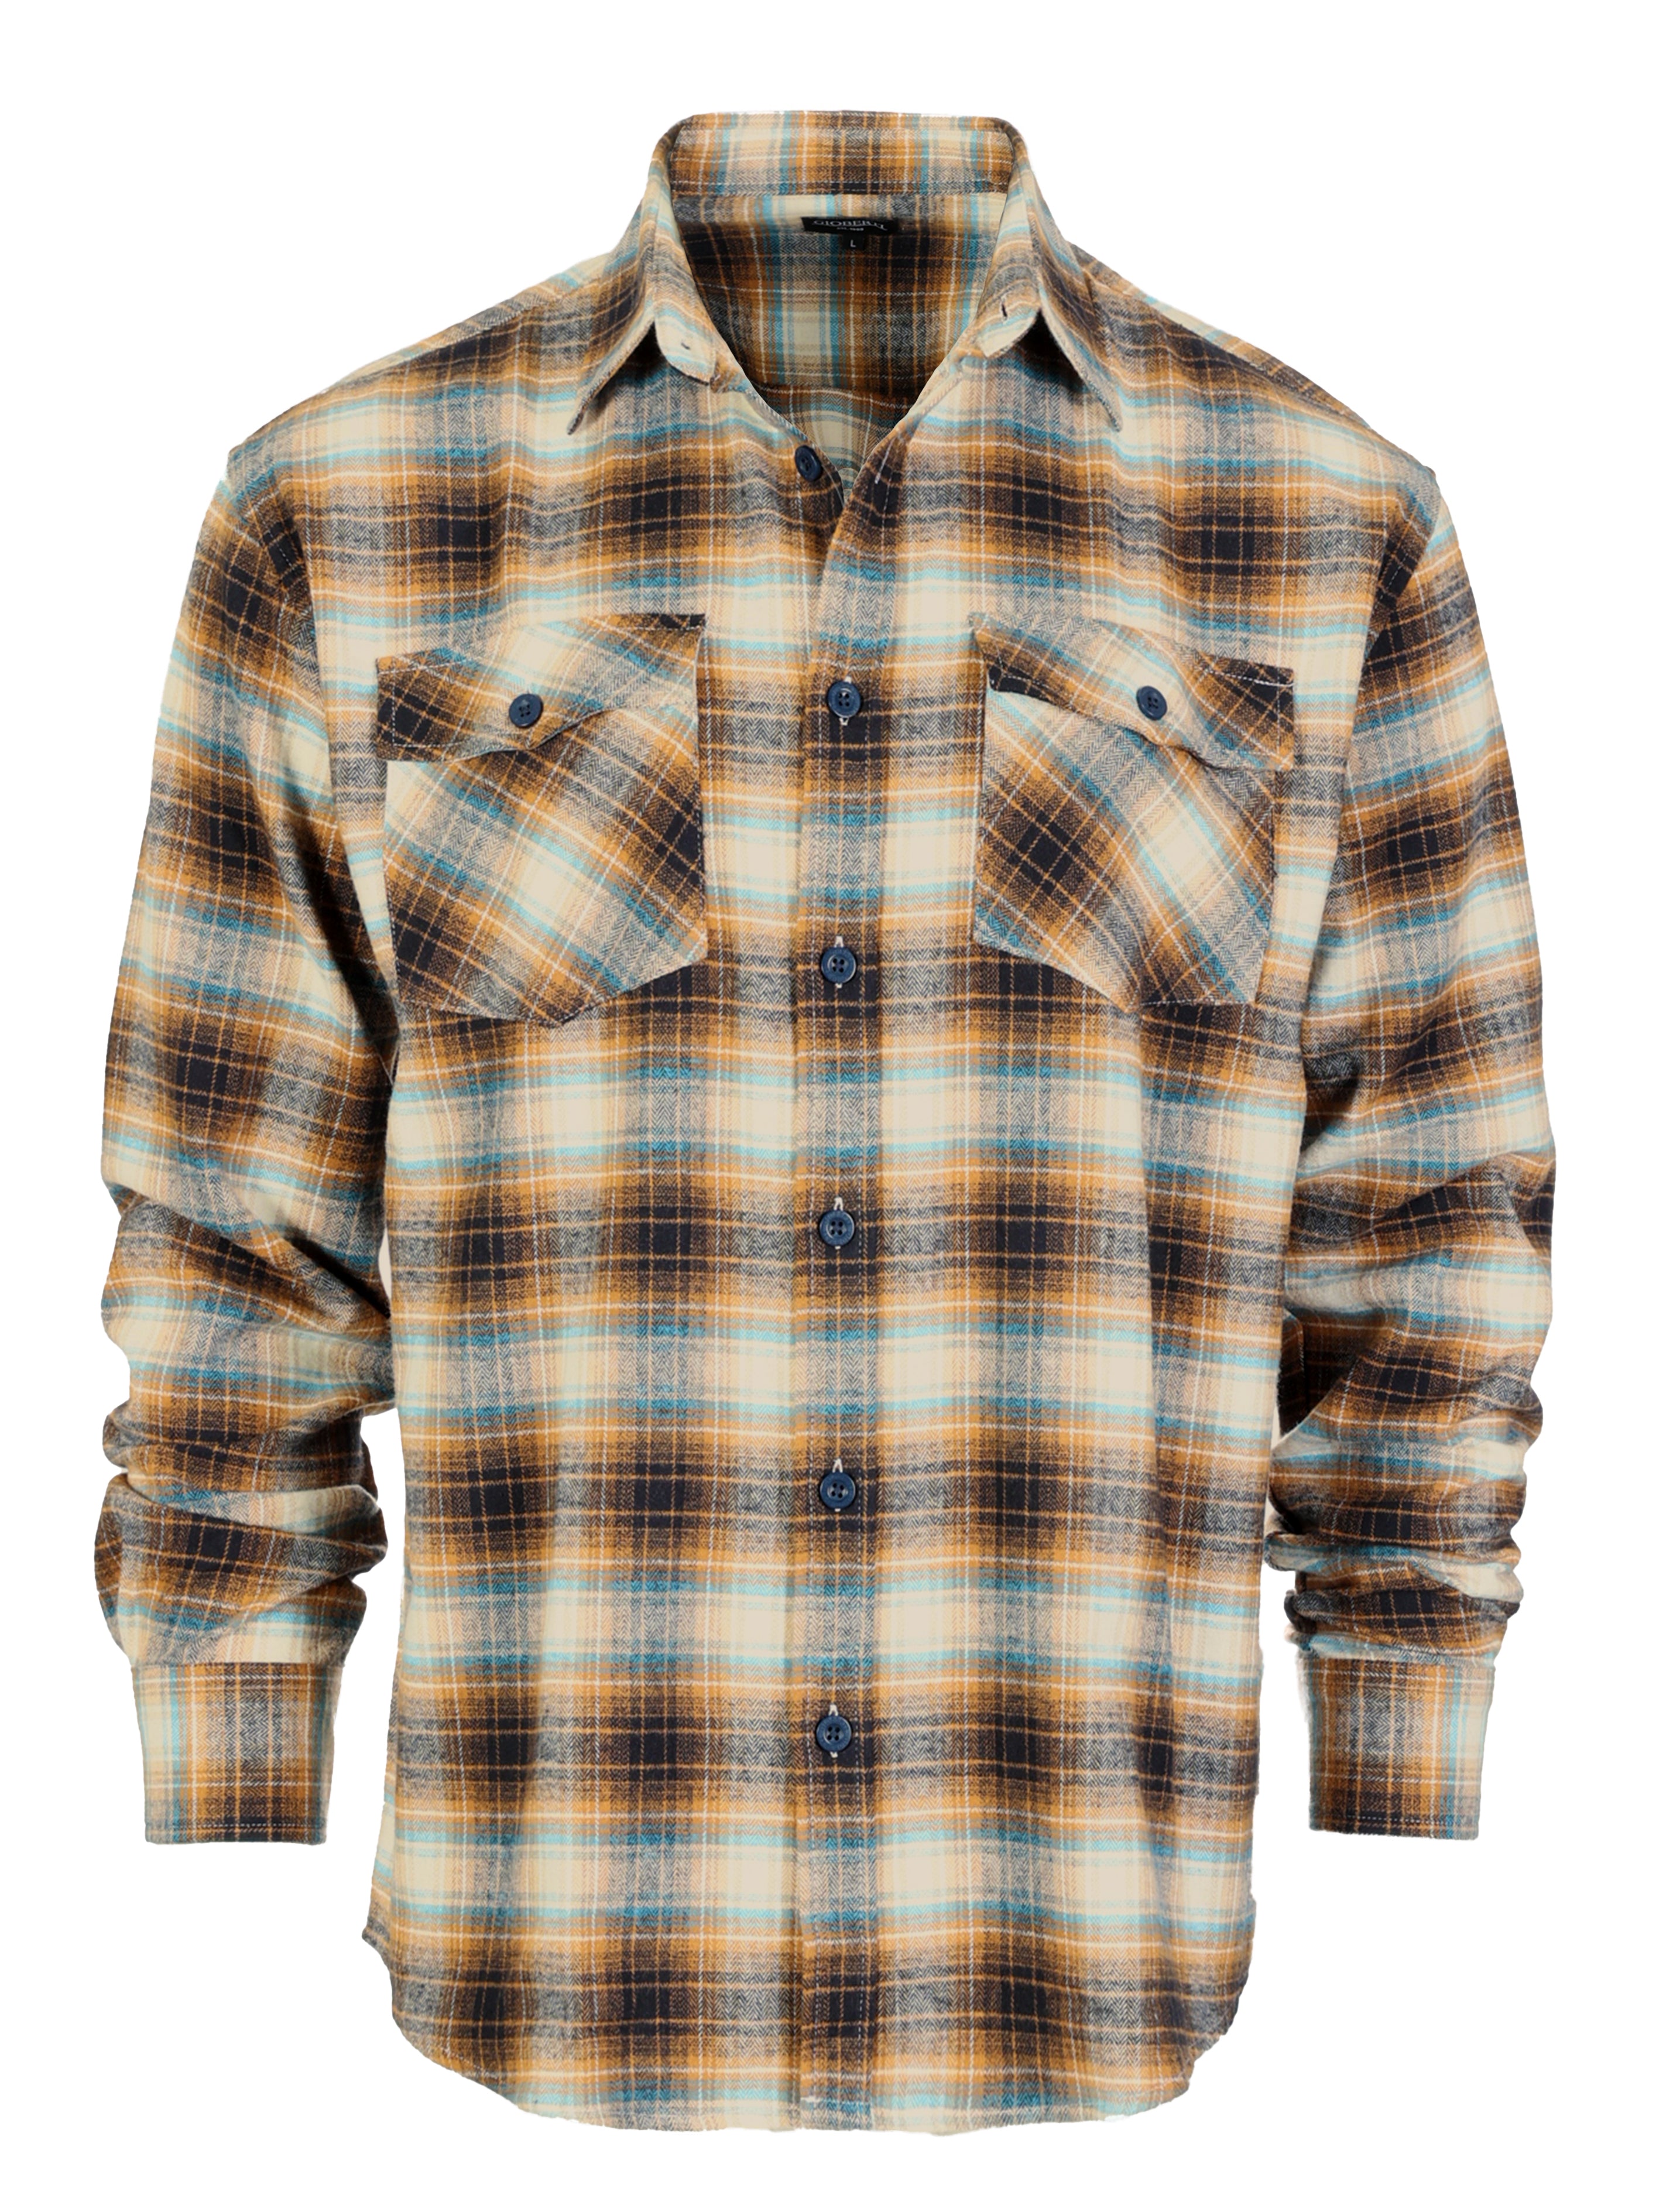 title:Gioberti Men's Copper / Beige / Cyan Plaid Checkered Brushed Flannel Shirt;color:Copper / Beige / Cyan